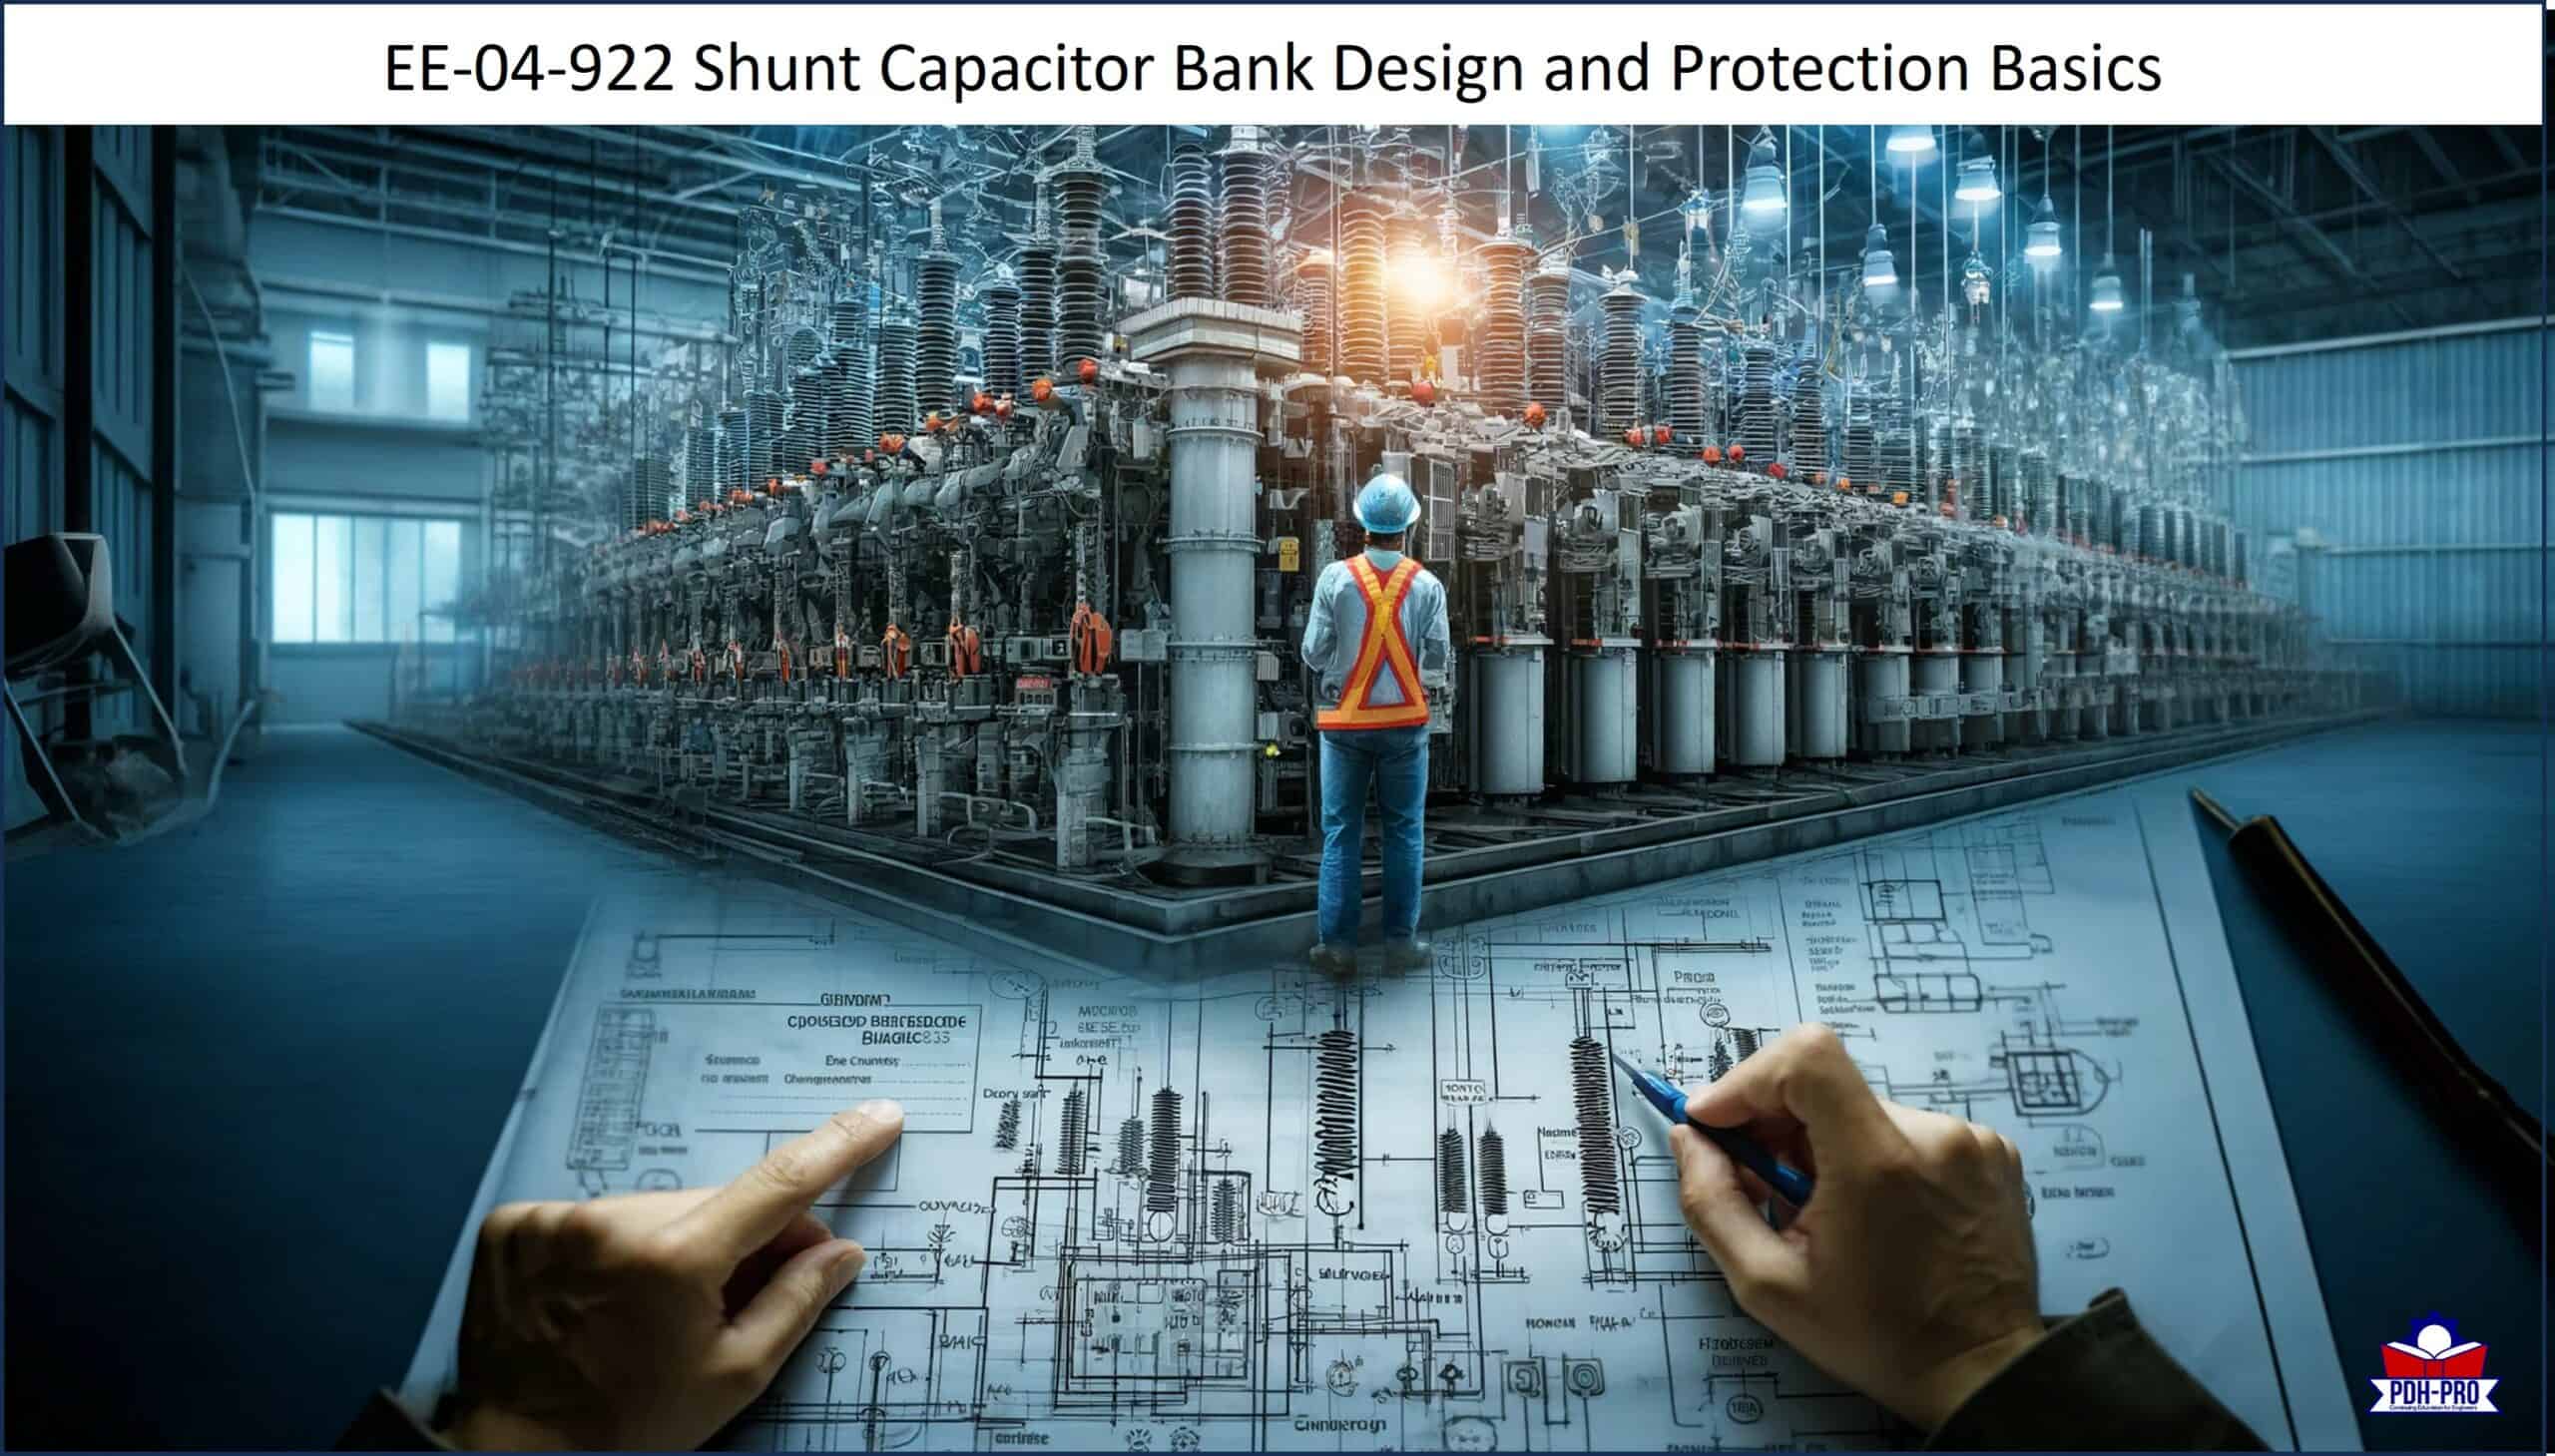 Shunt Capacitor Bank Design and Protection Basics